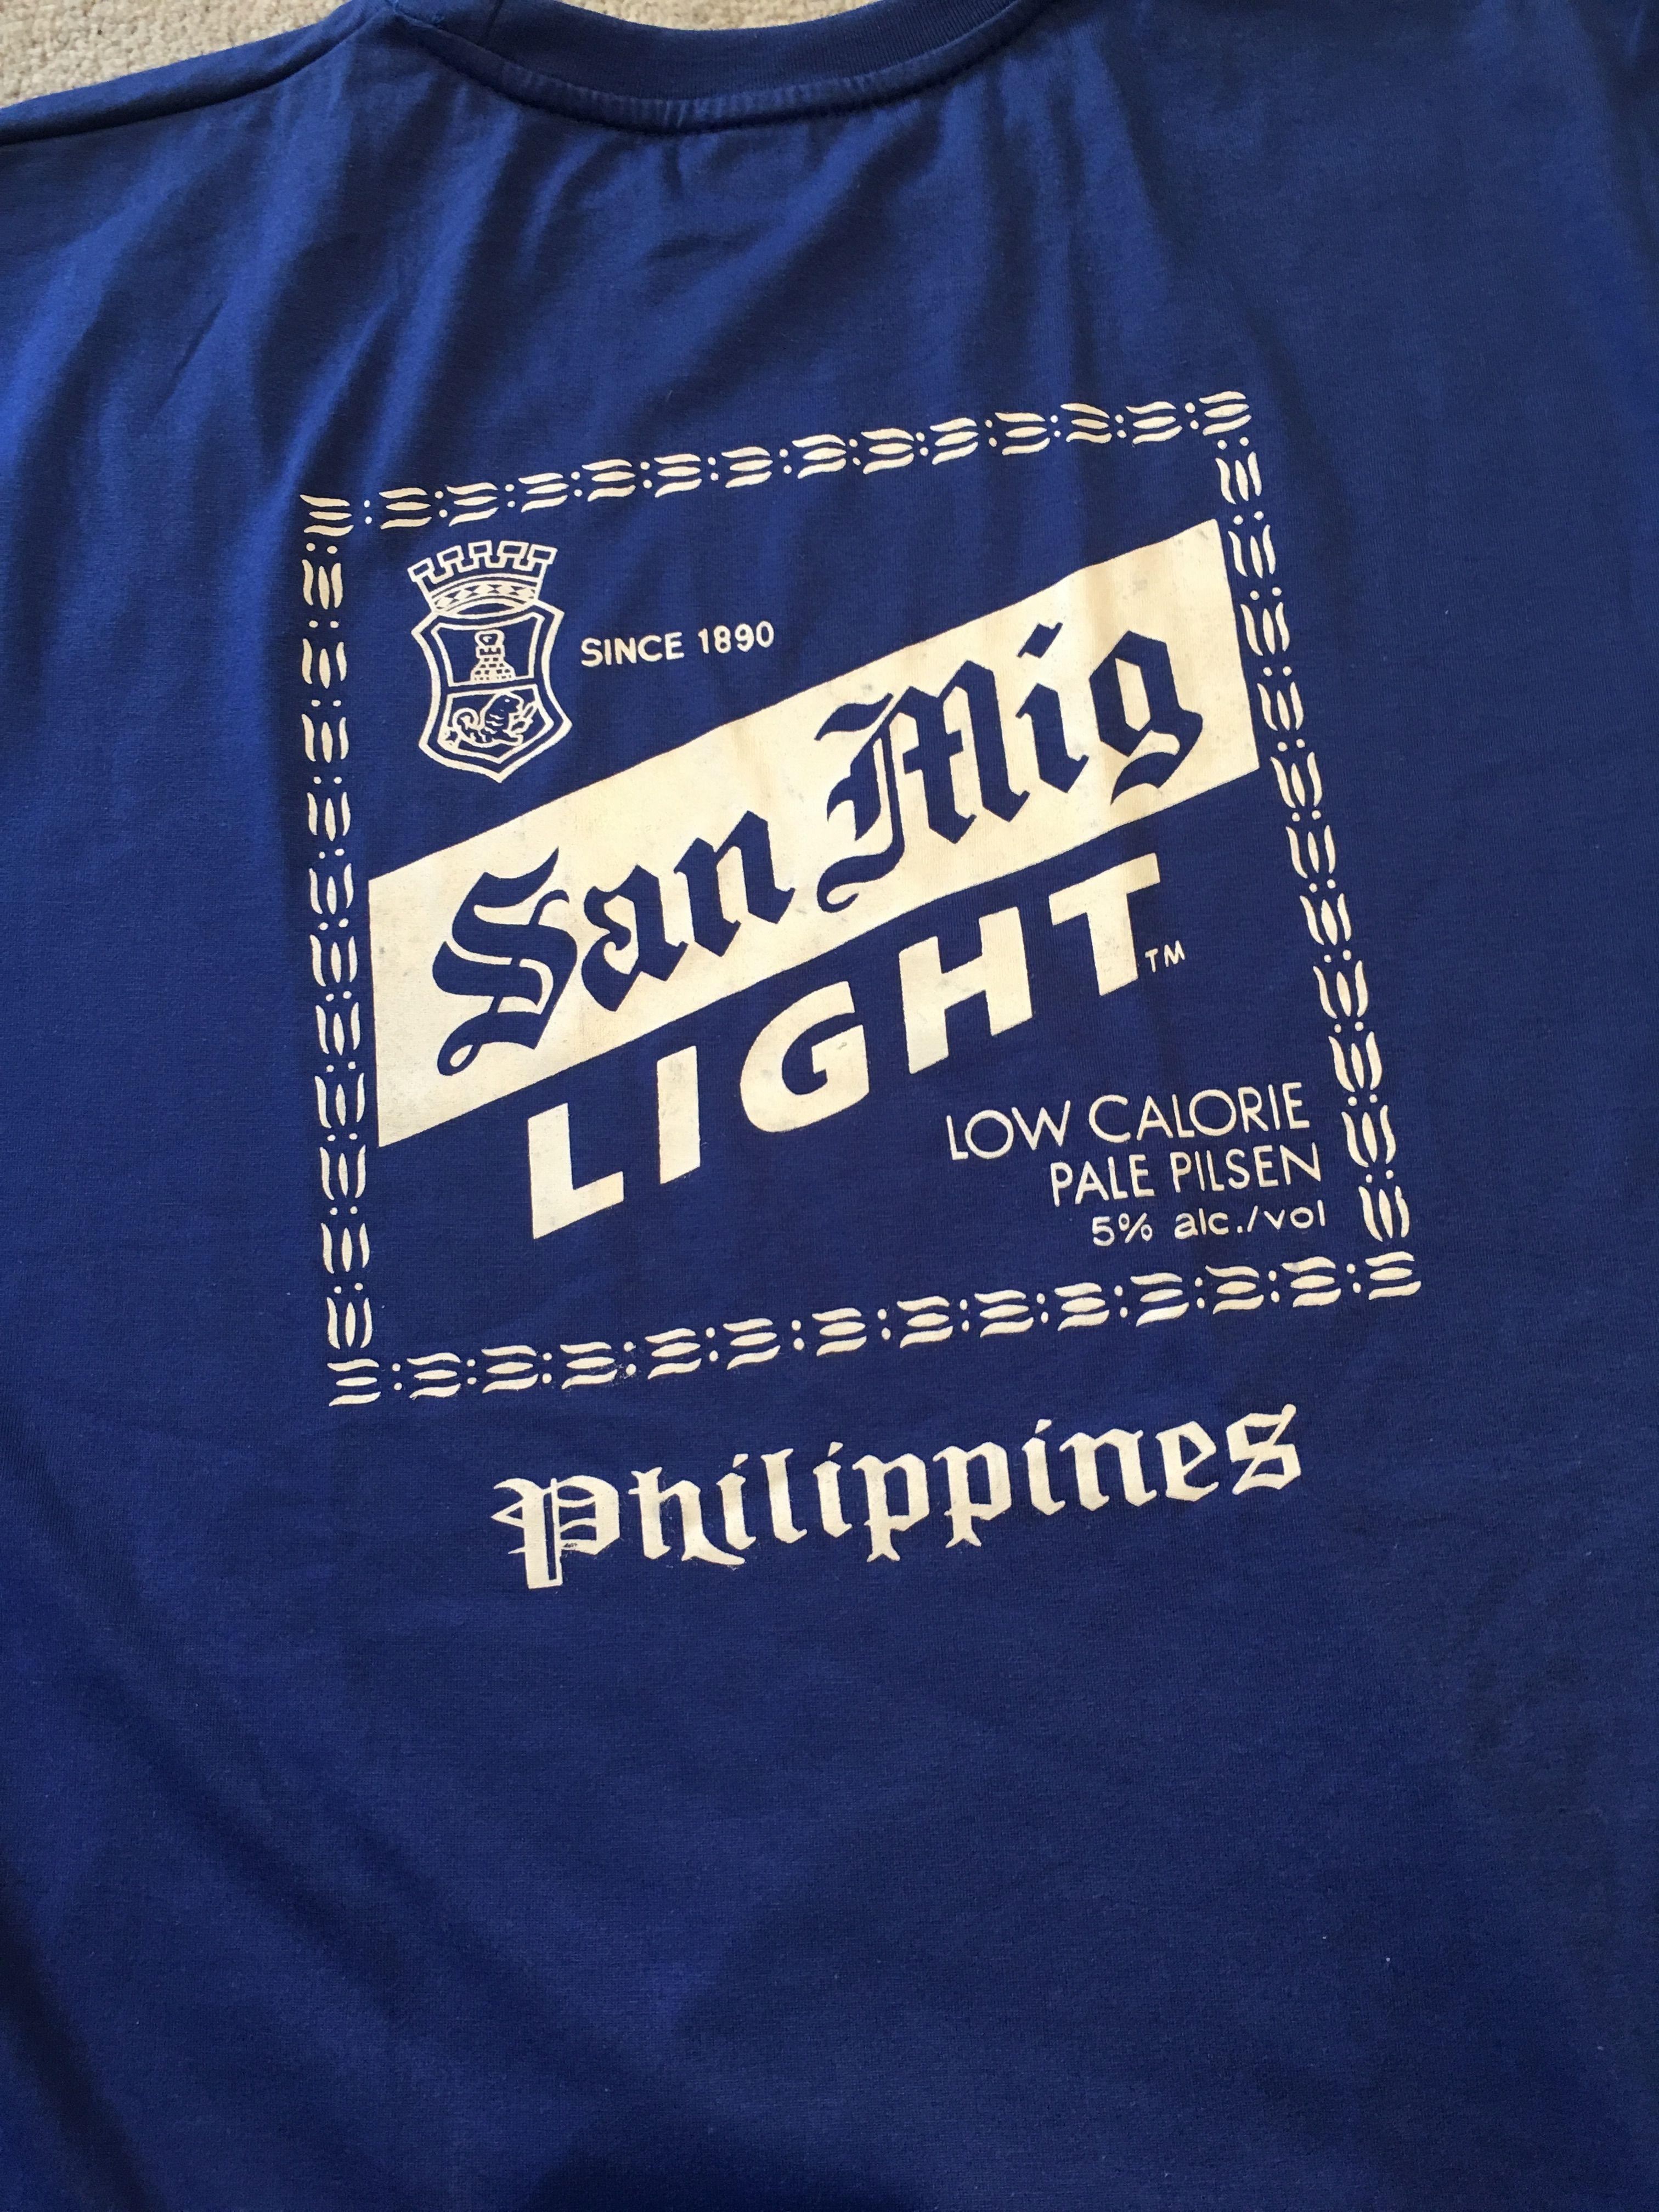 San Mig Light Logo - San+Mig+Light+Beer+Philippines+on+a+new+XXL+Blue+Tee+Shirt:+San+ ...